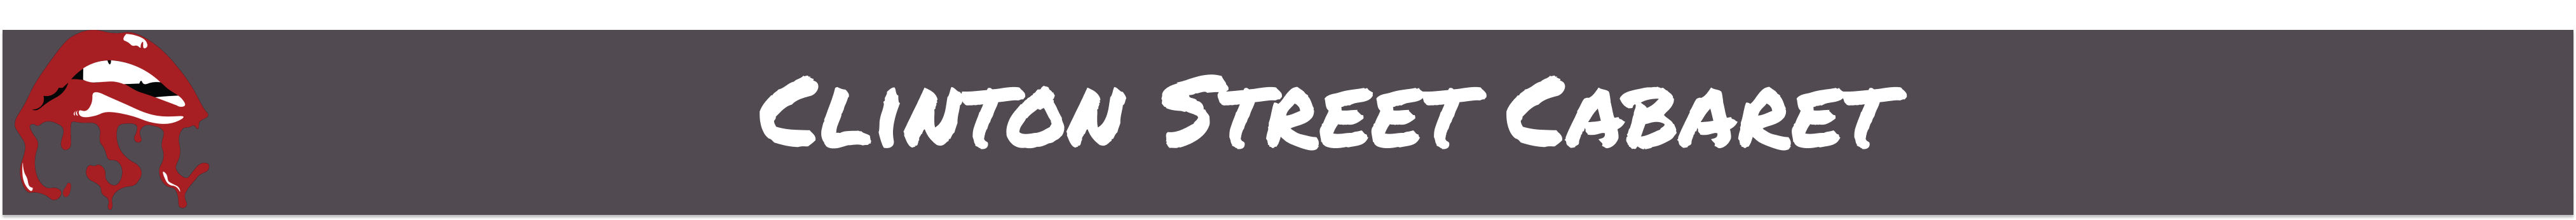 Clinton Street Cabaret Logo